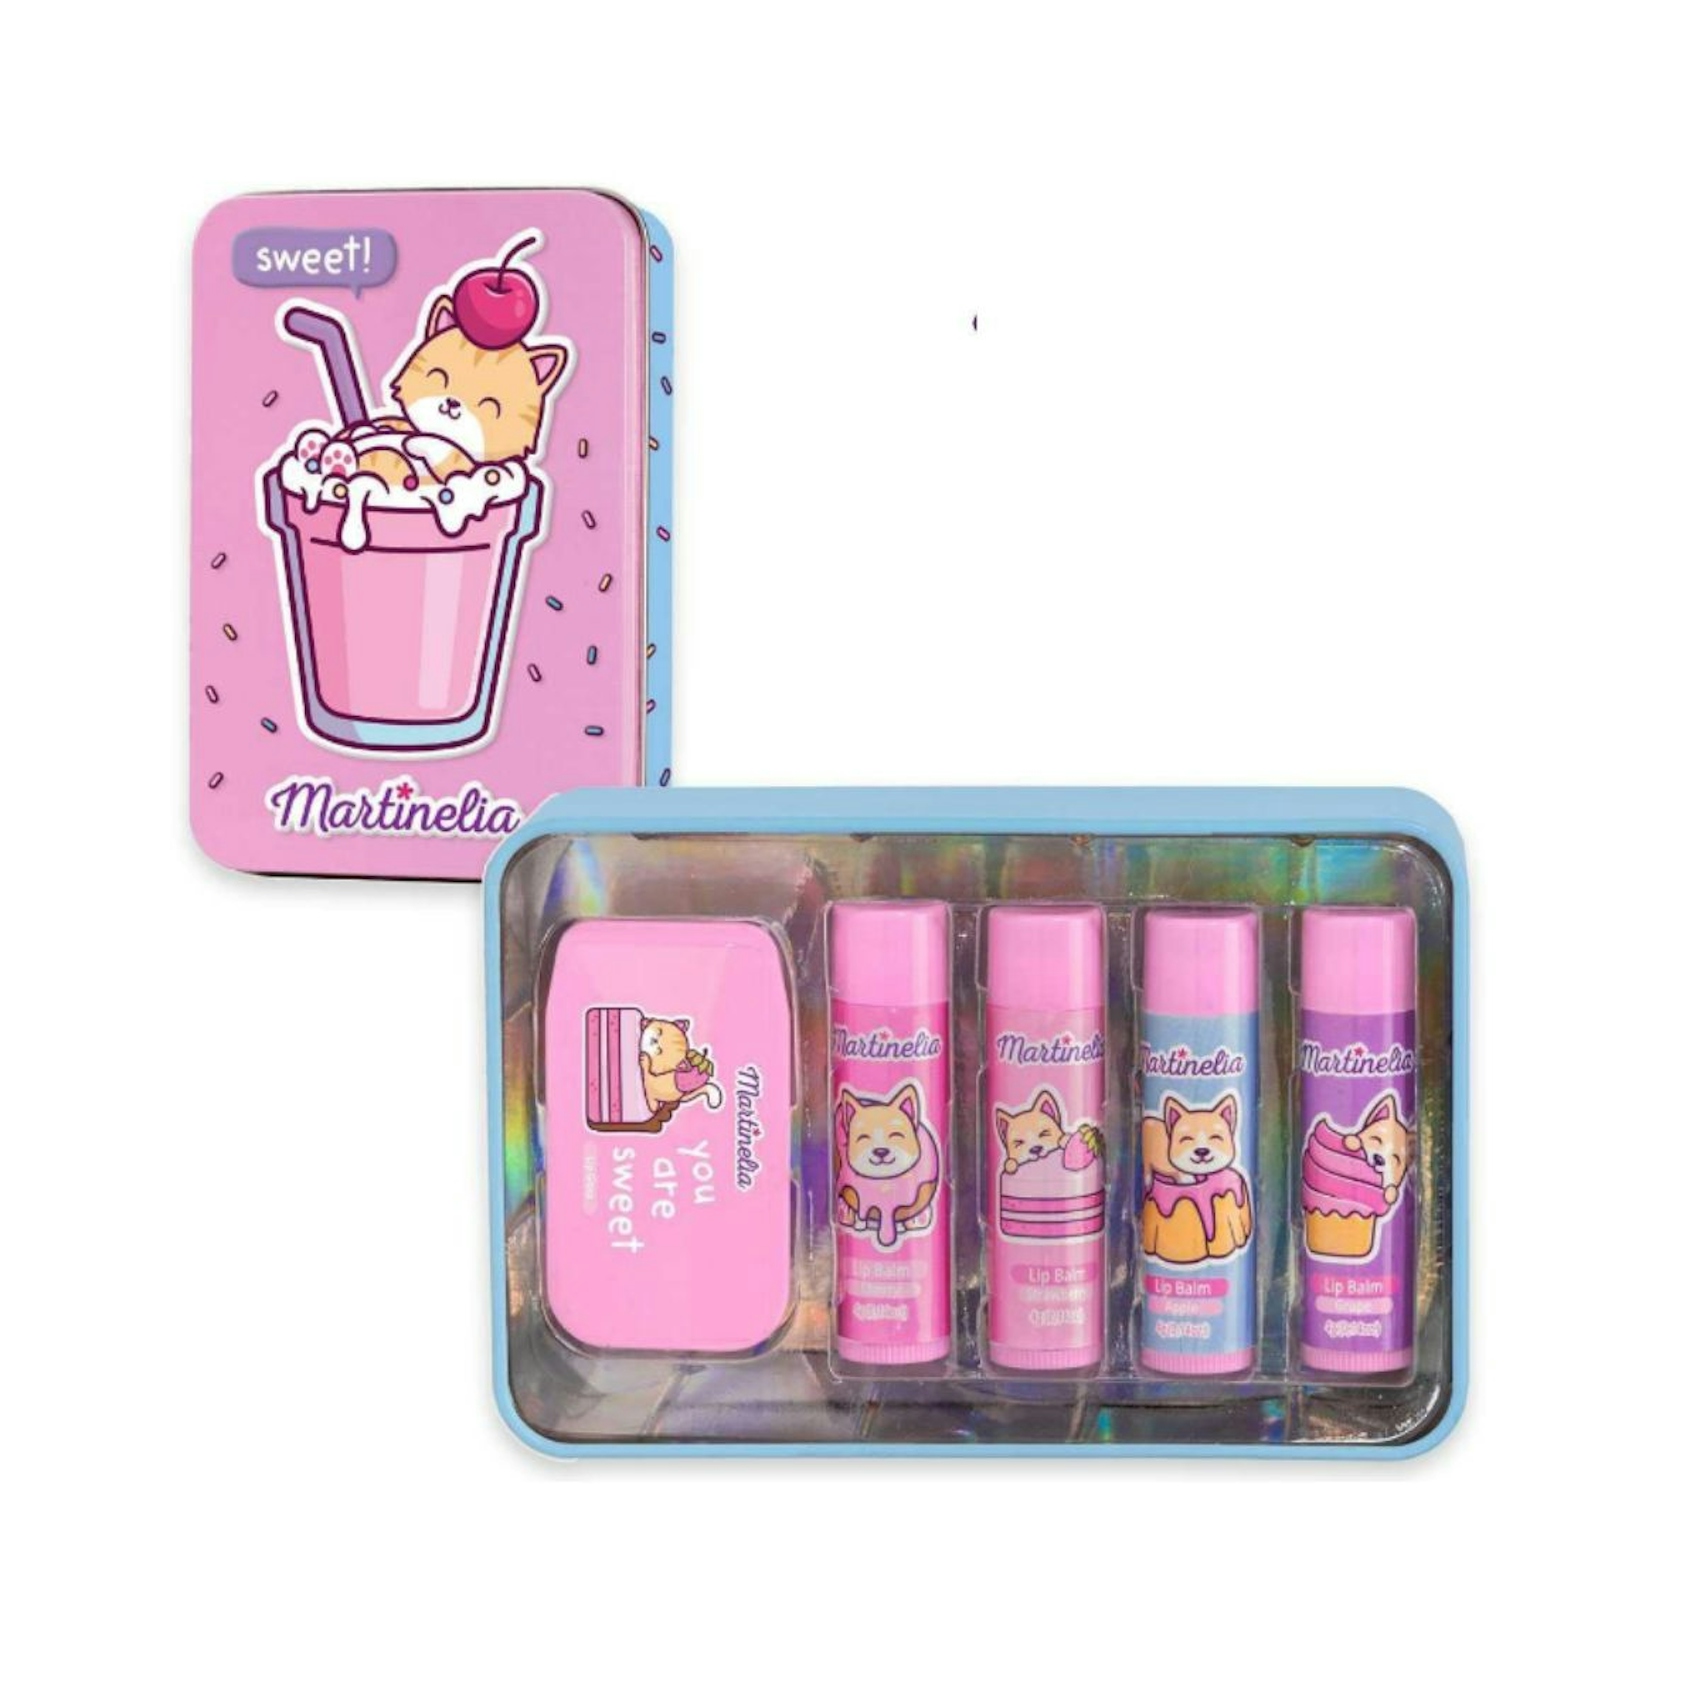 Martinelia Yummy Lip Care Tin Box